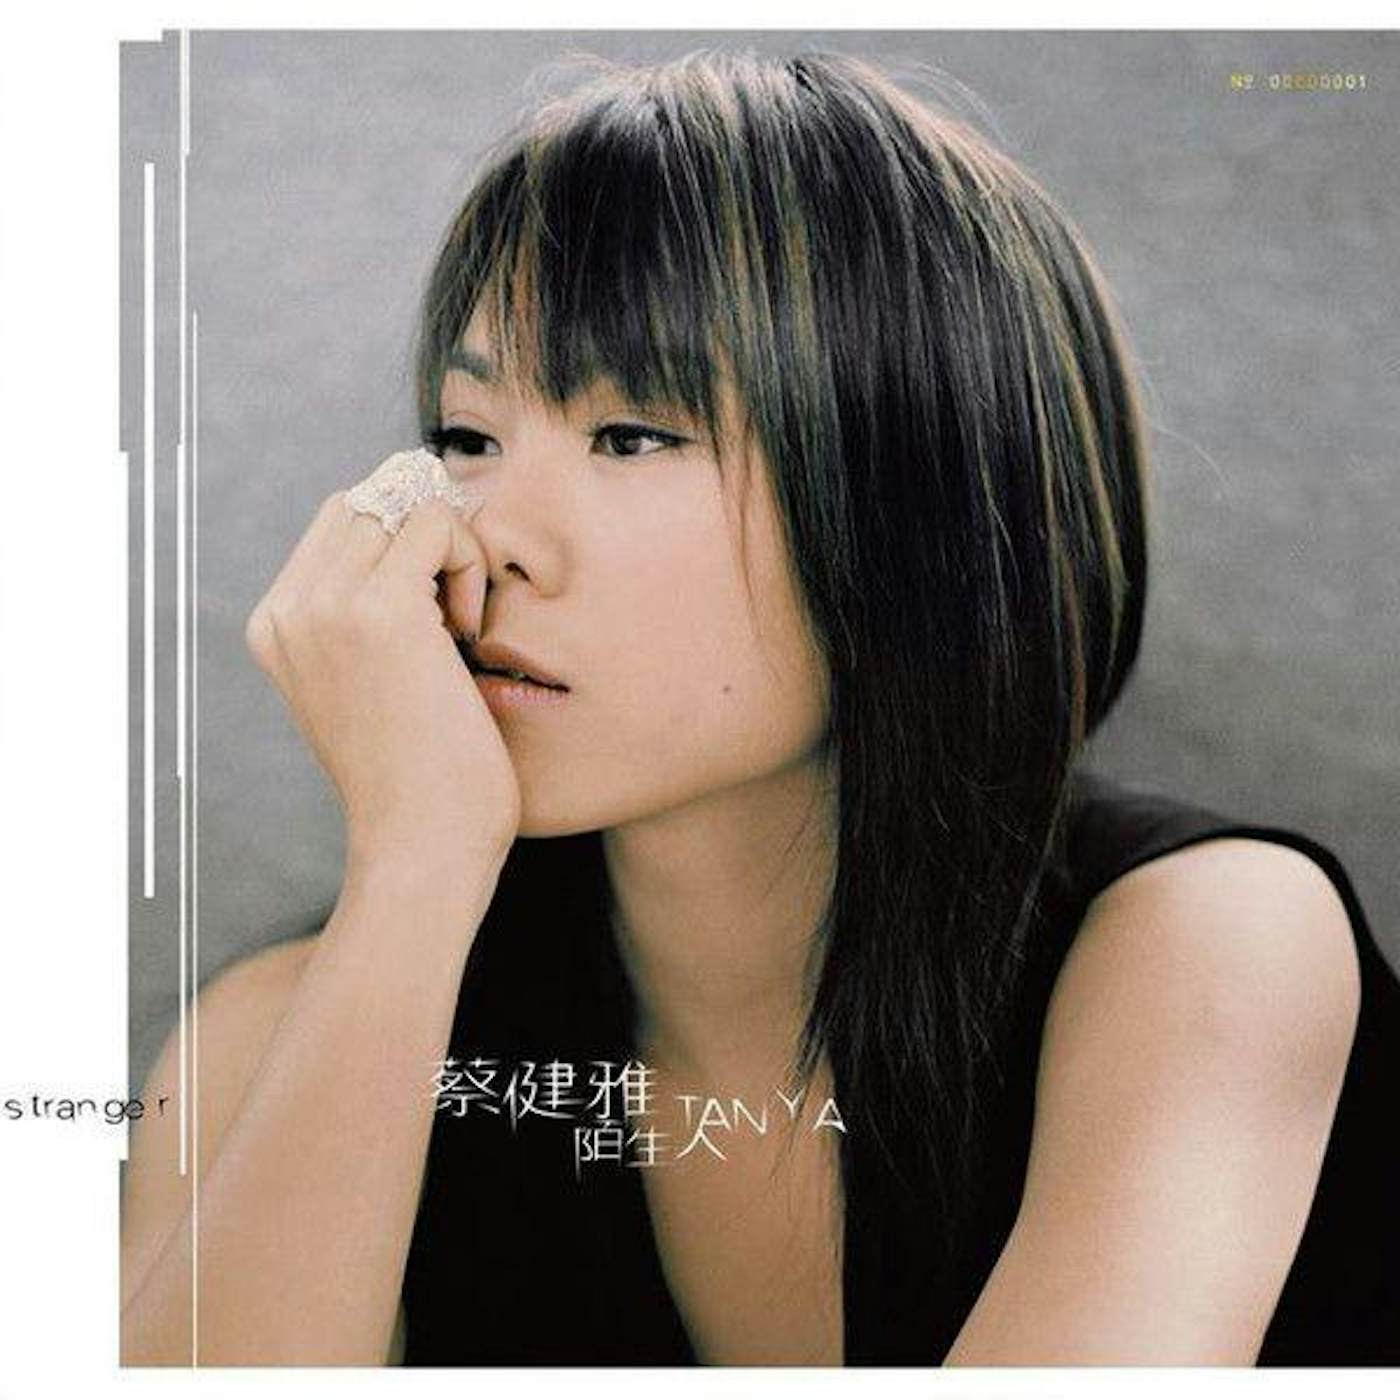 Tanya Chua MO SHENG REN ( STRANGER ) Vinyl Record